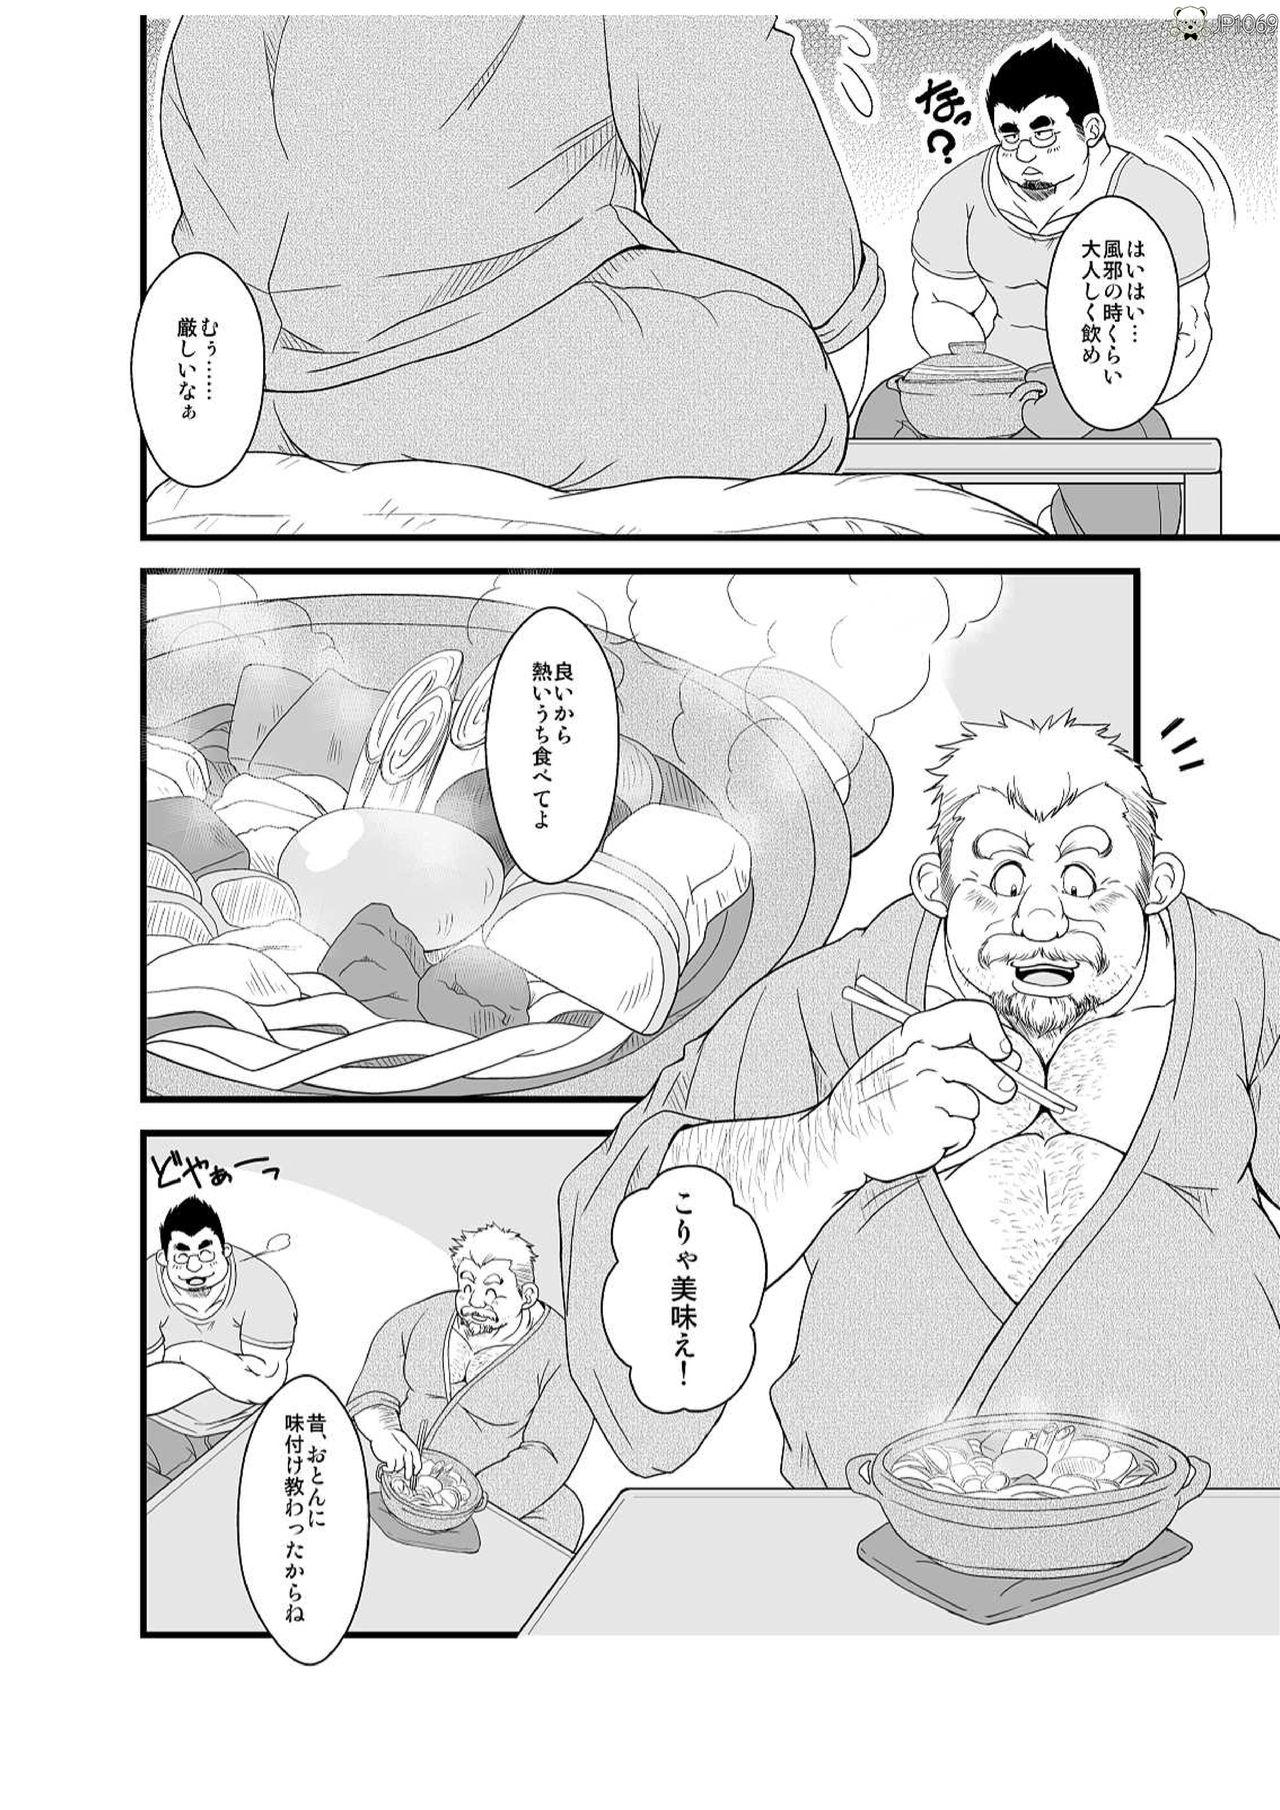 Jockstrap Haru natsu aki fuyu - Original Oldman - Page 4